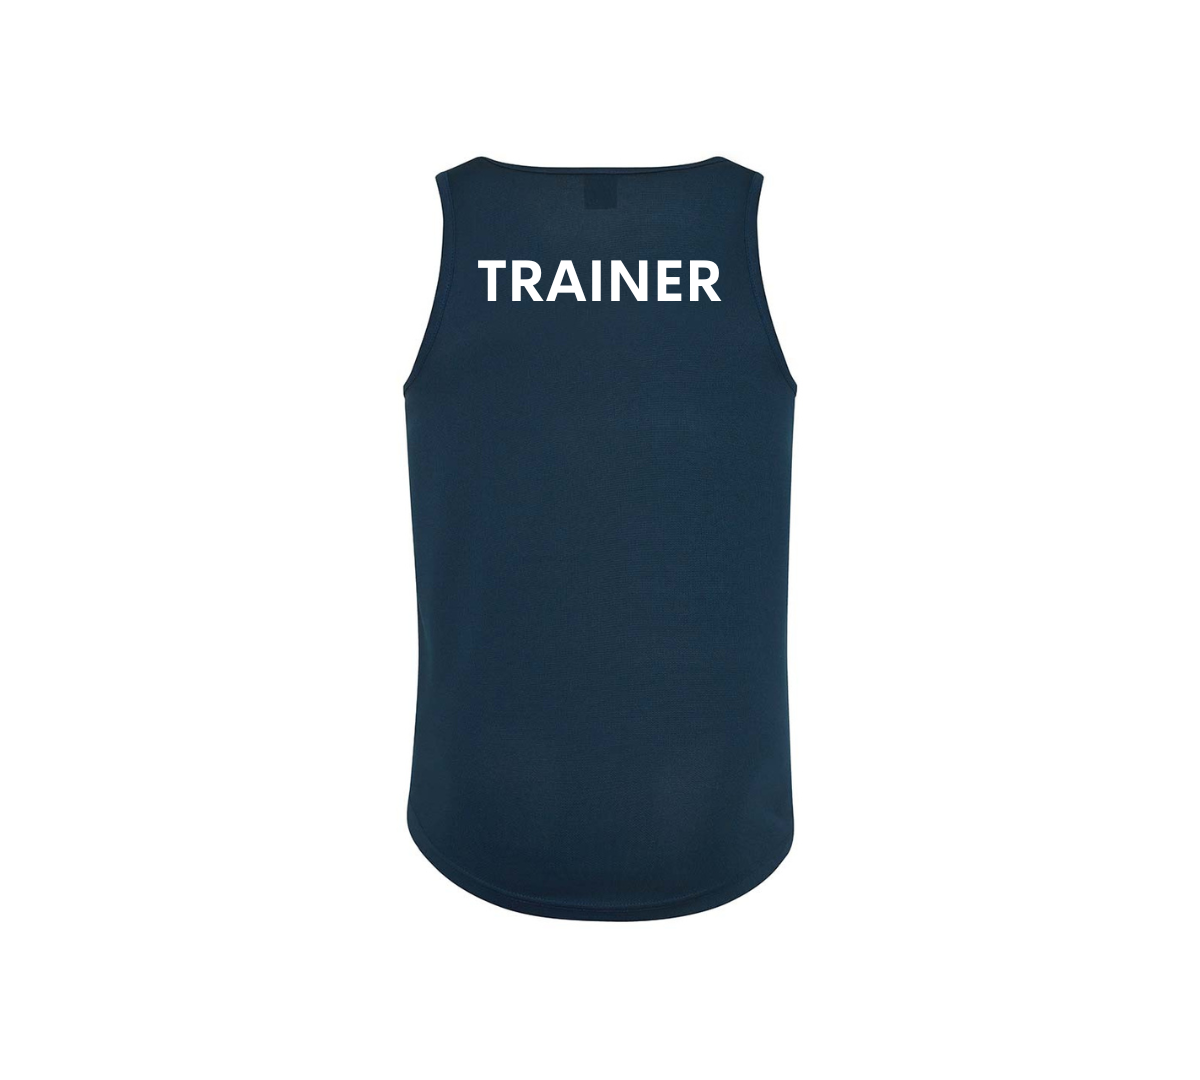 The Shredquarters 'Trainer' Training Vest